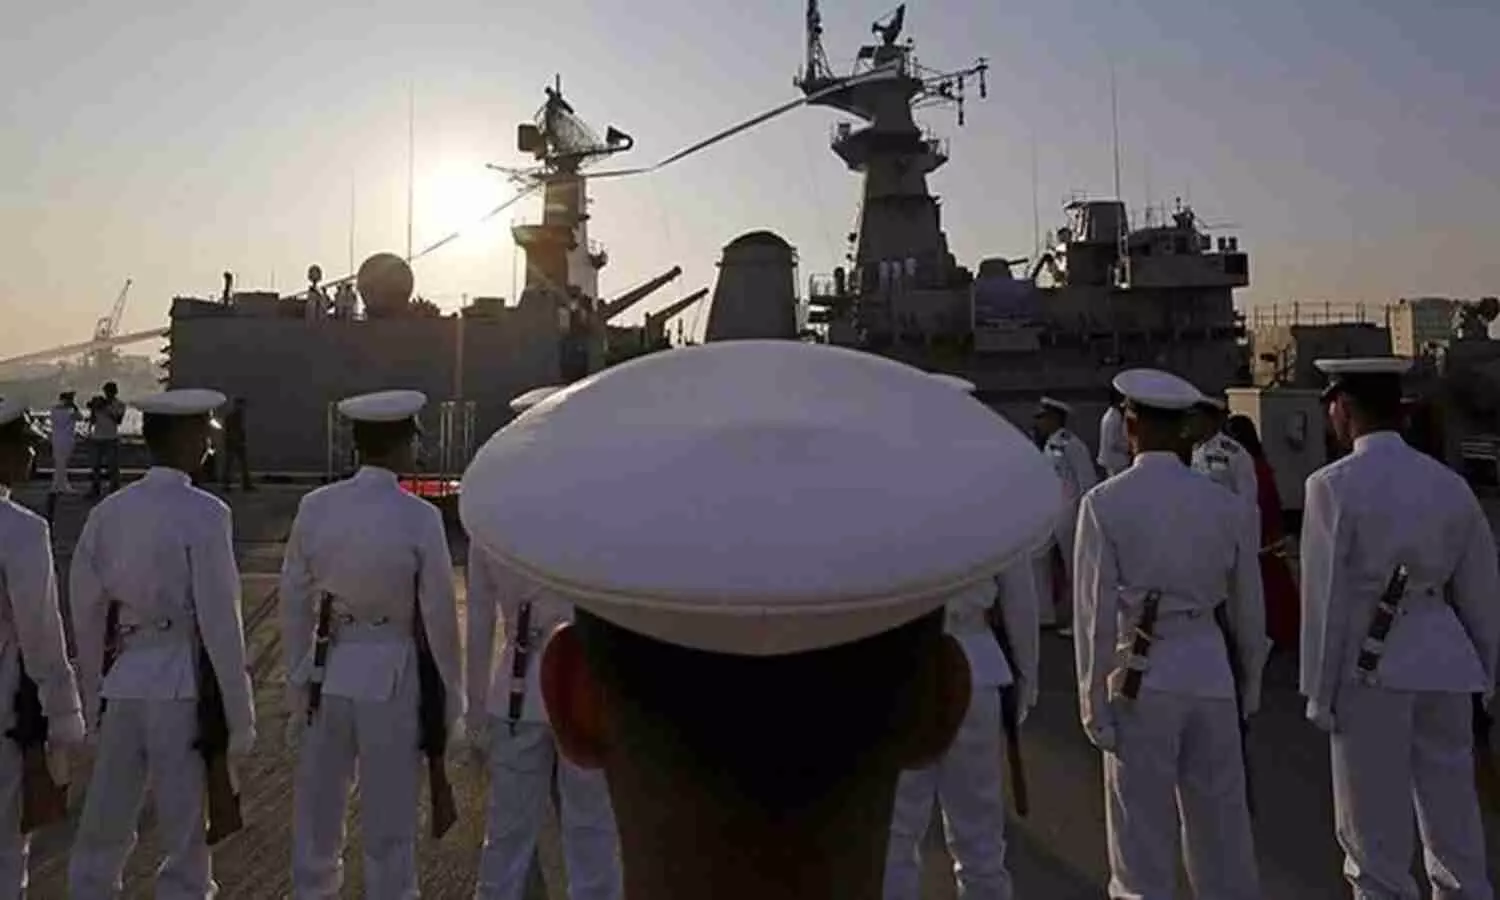 Navy officers stranded in Qatar